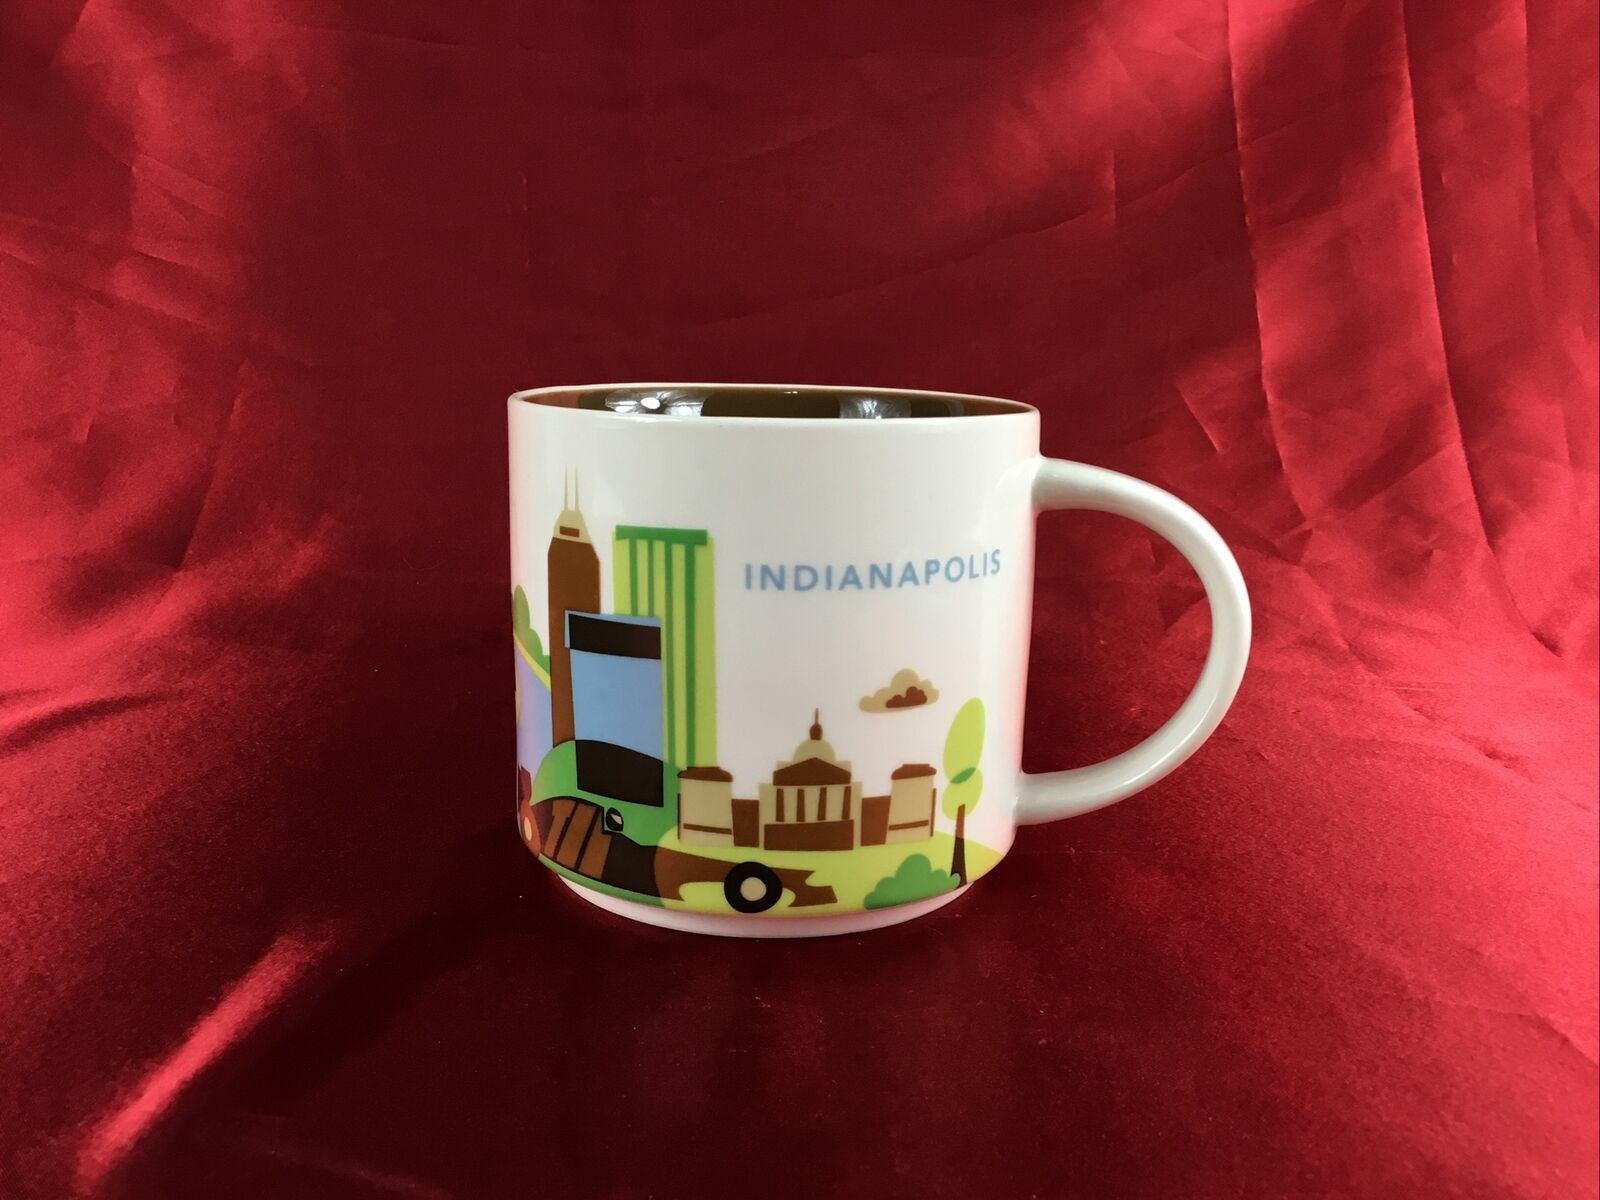 Starbucks Mug 2015 You Are Here Collection Indianapolis 14 oz. Coffee